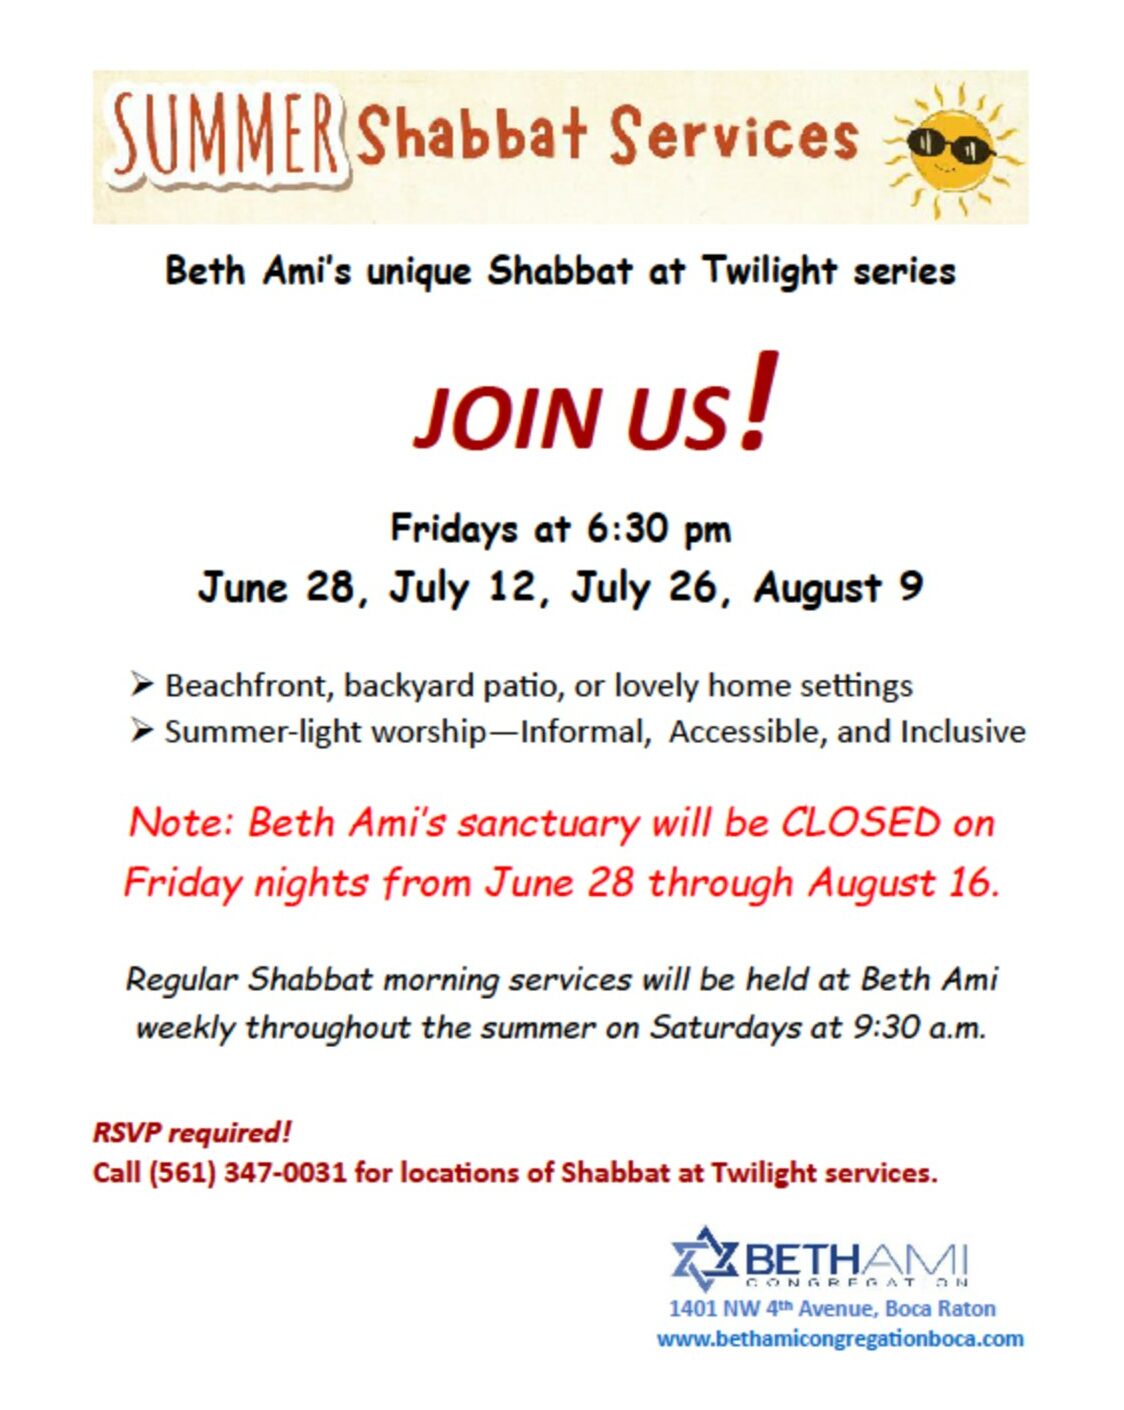 Summer Shabbat Services